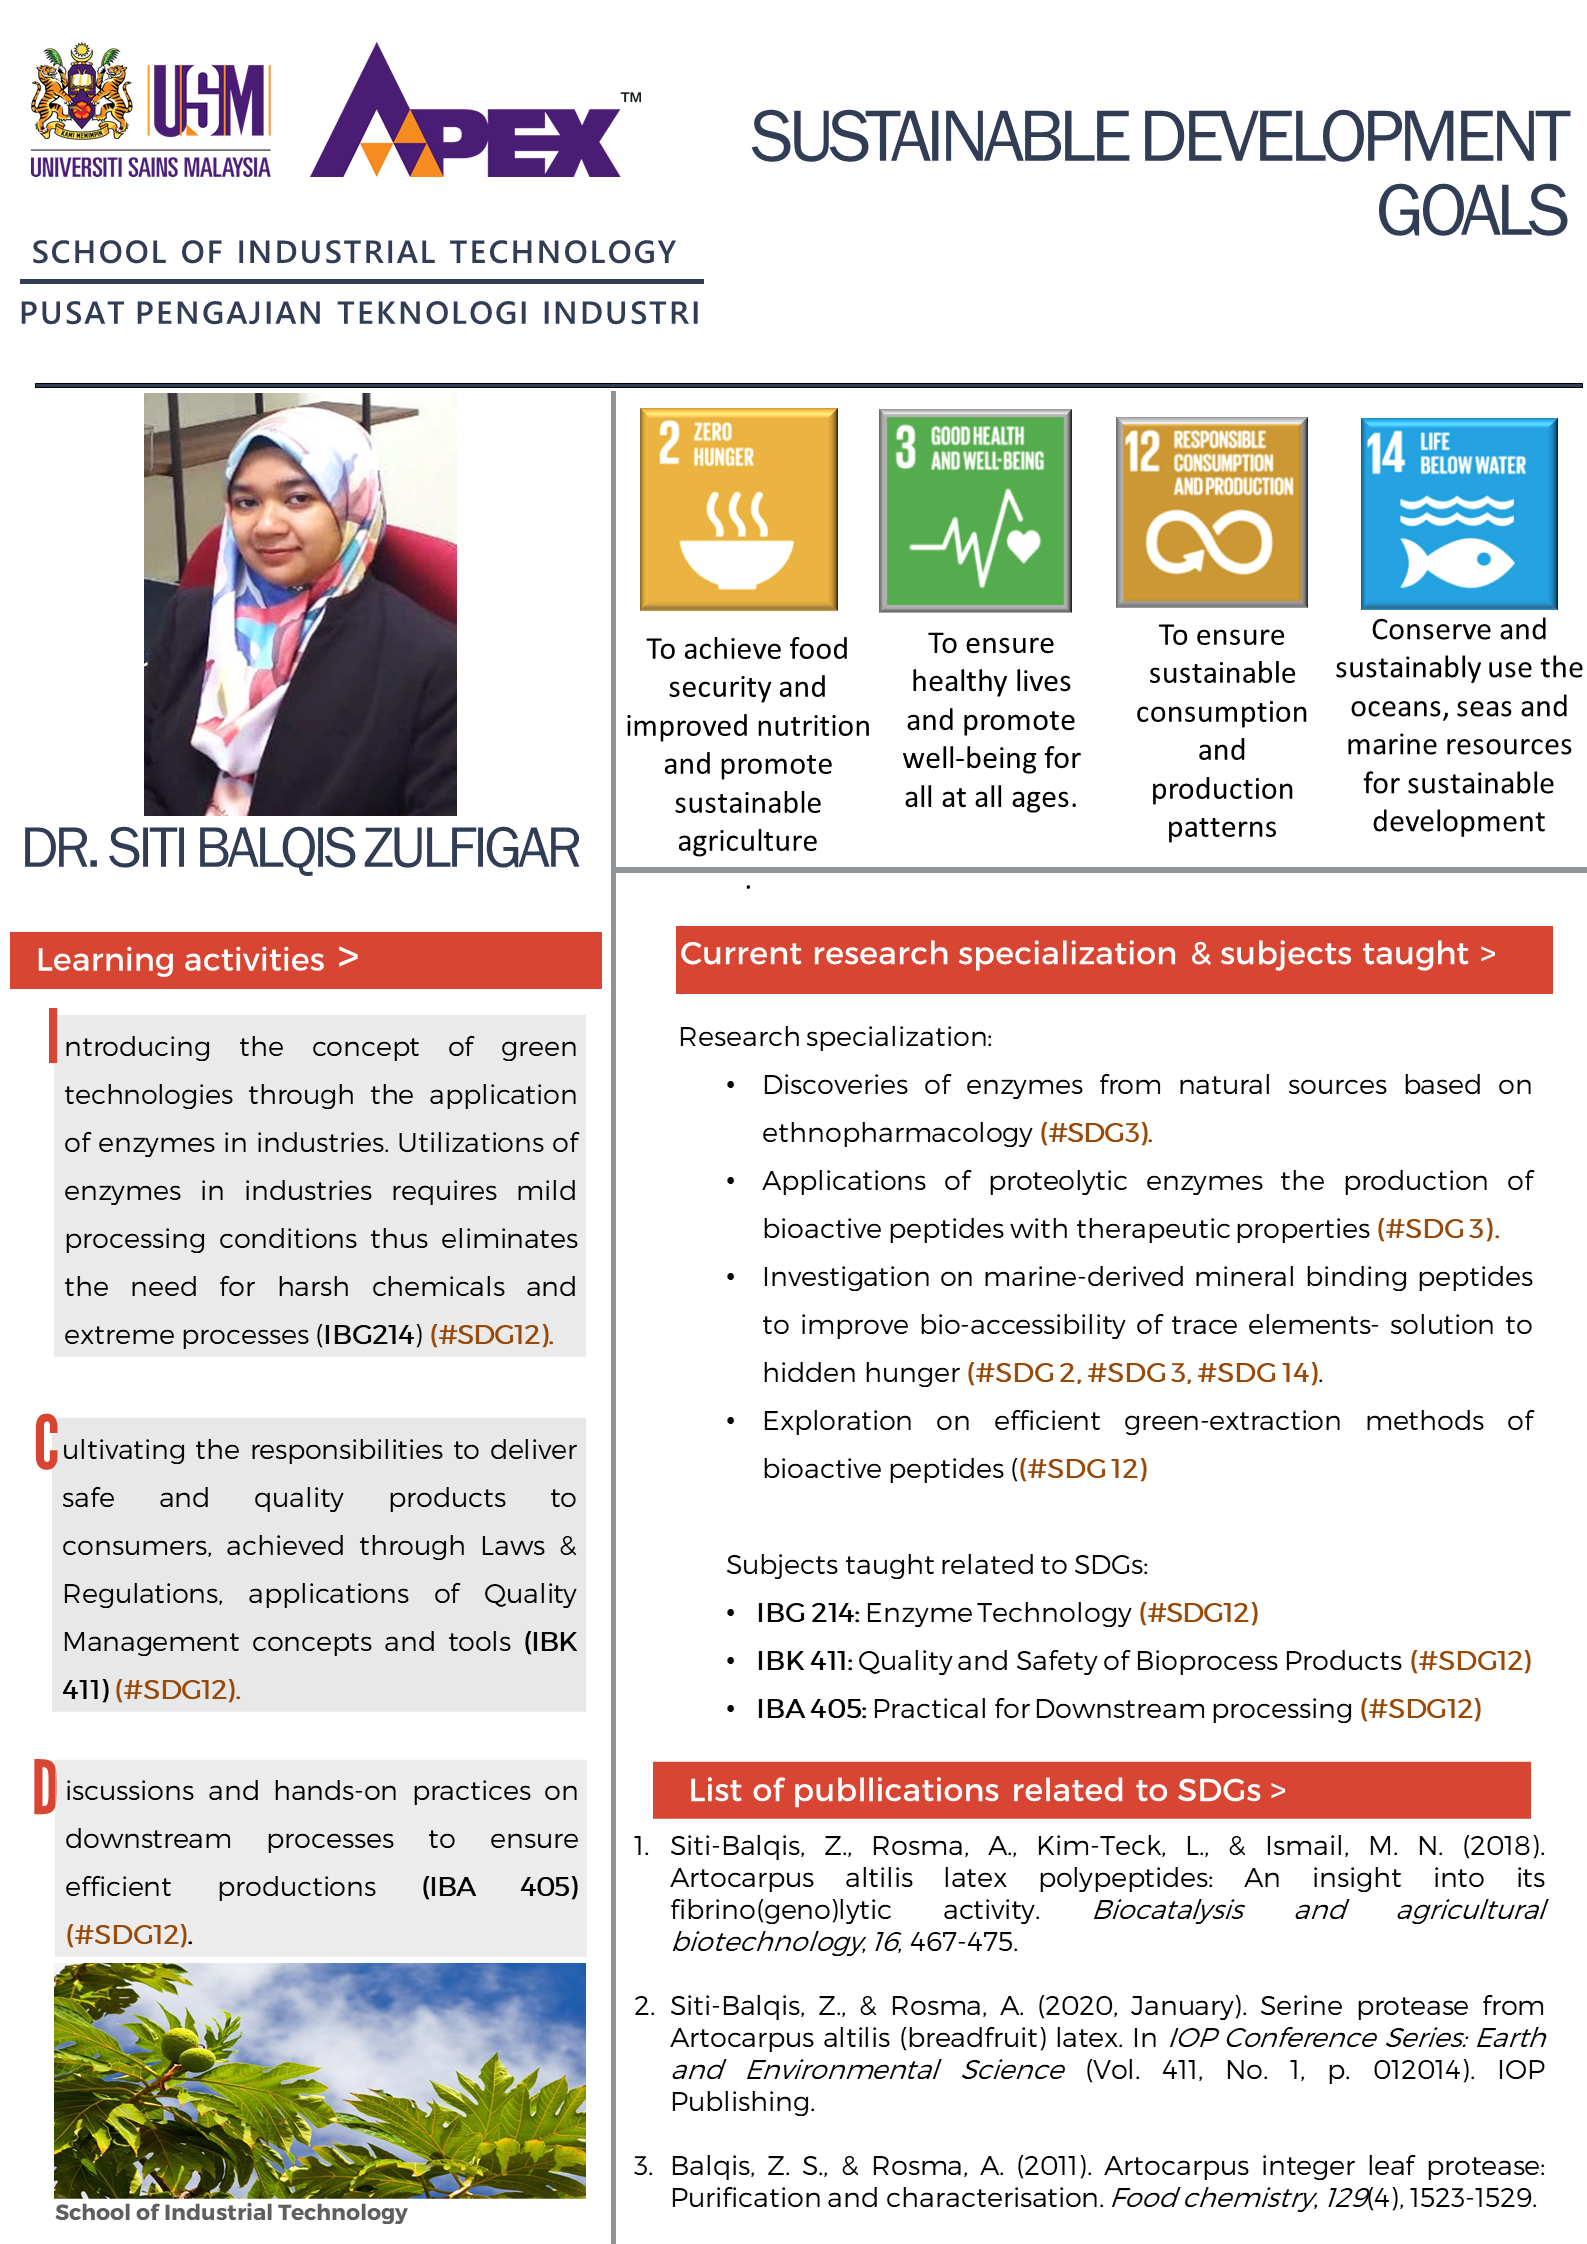 SDG_POSTER-_Siti_Balqis.png